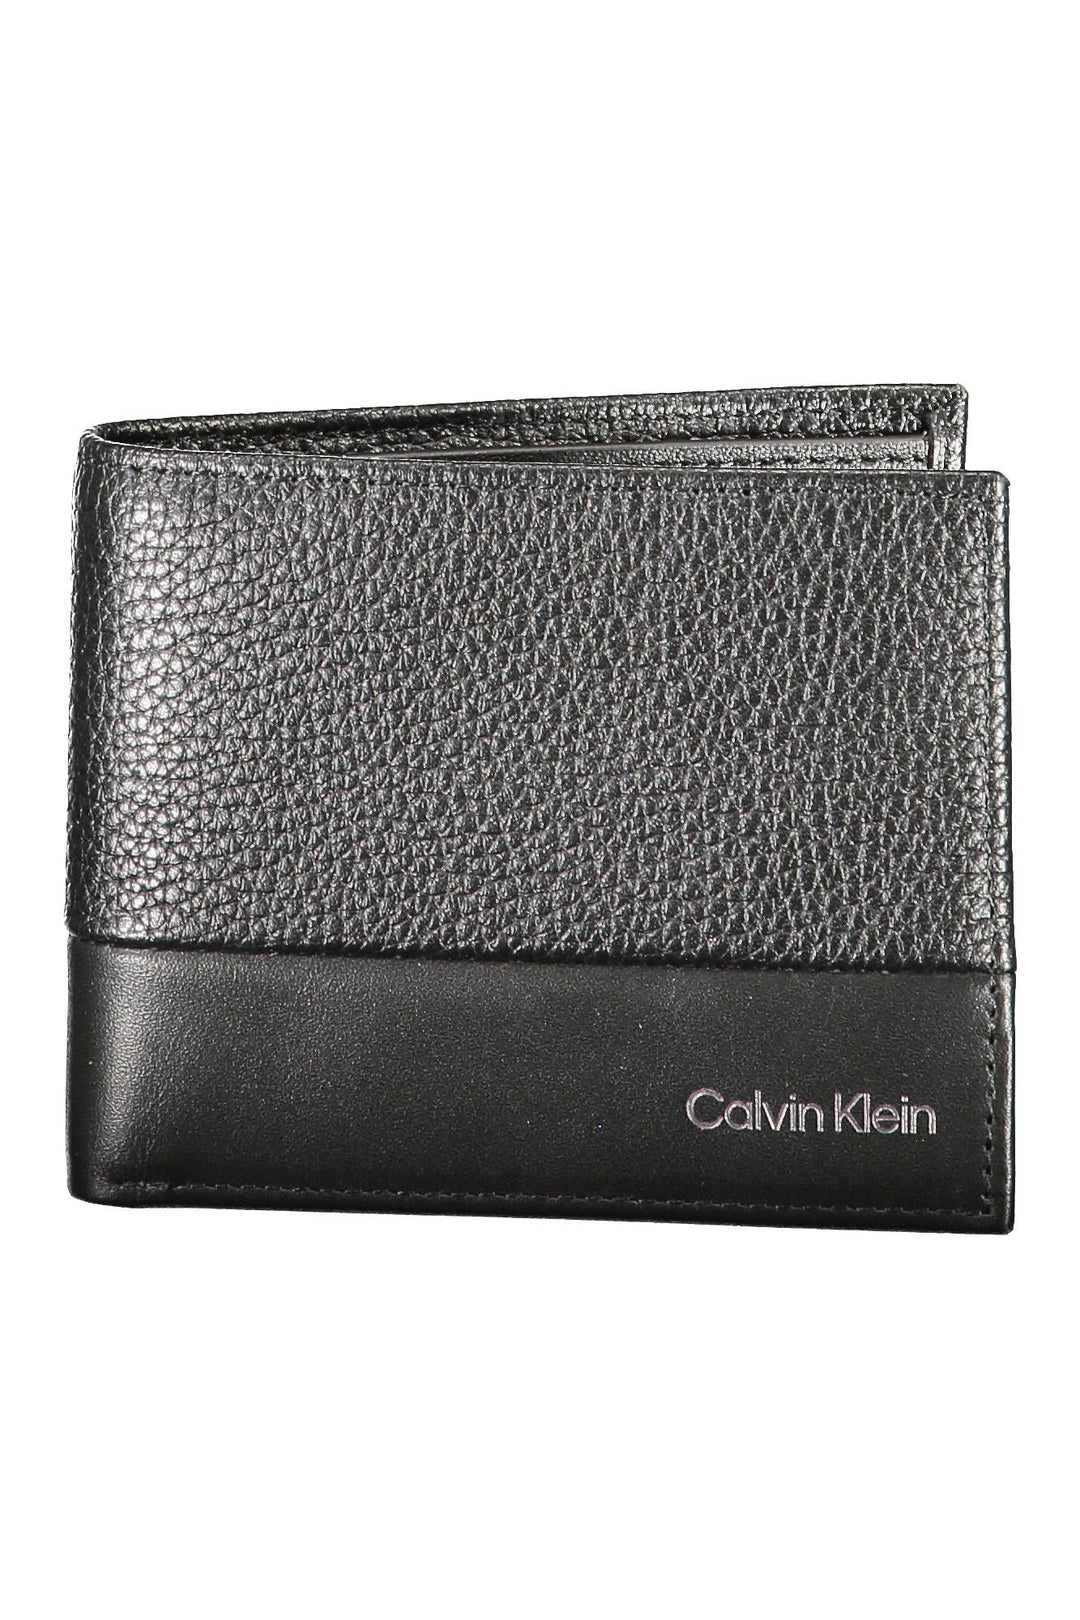 Calvin Klein Sleek Black Leather RFID Wallet